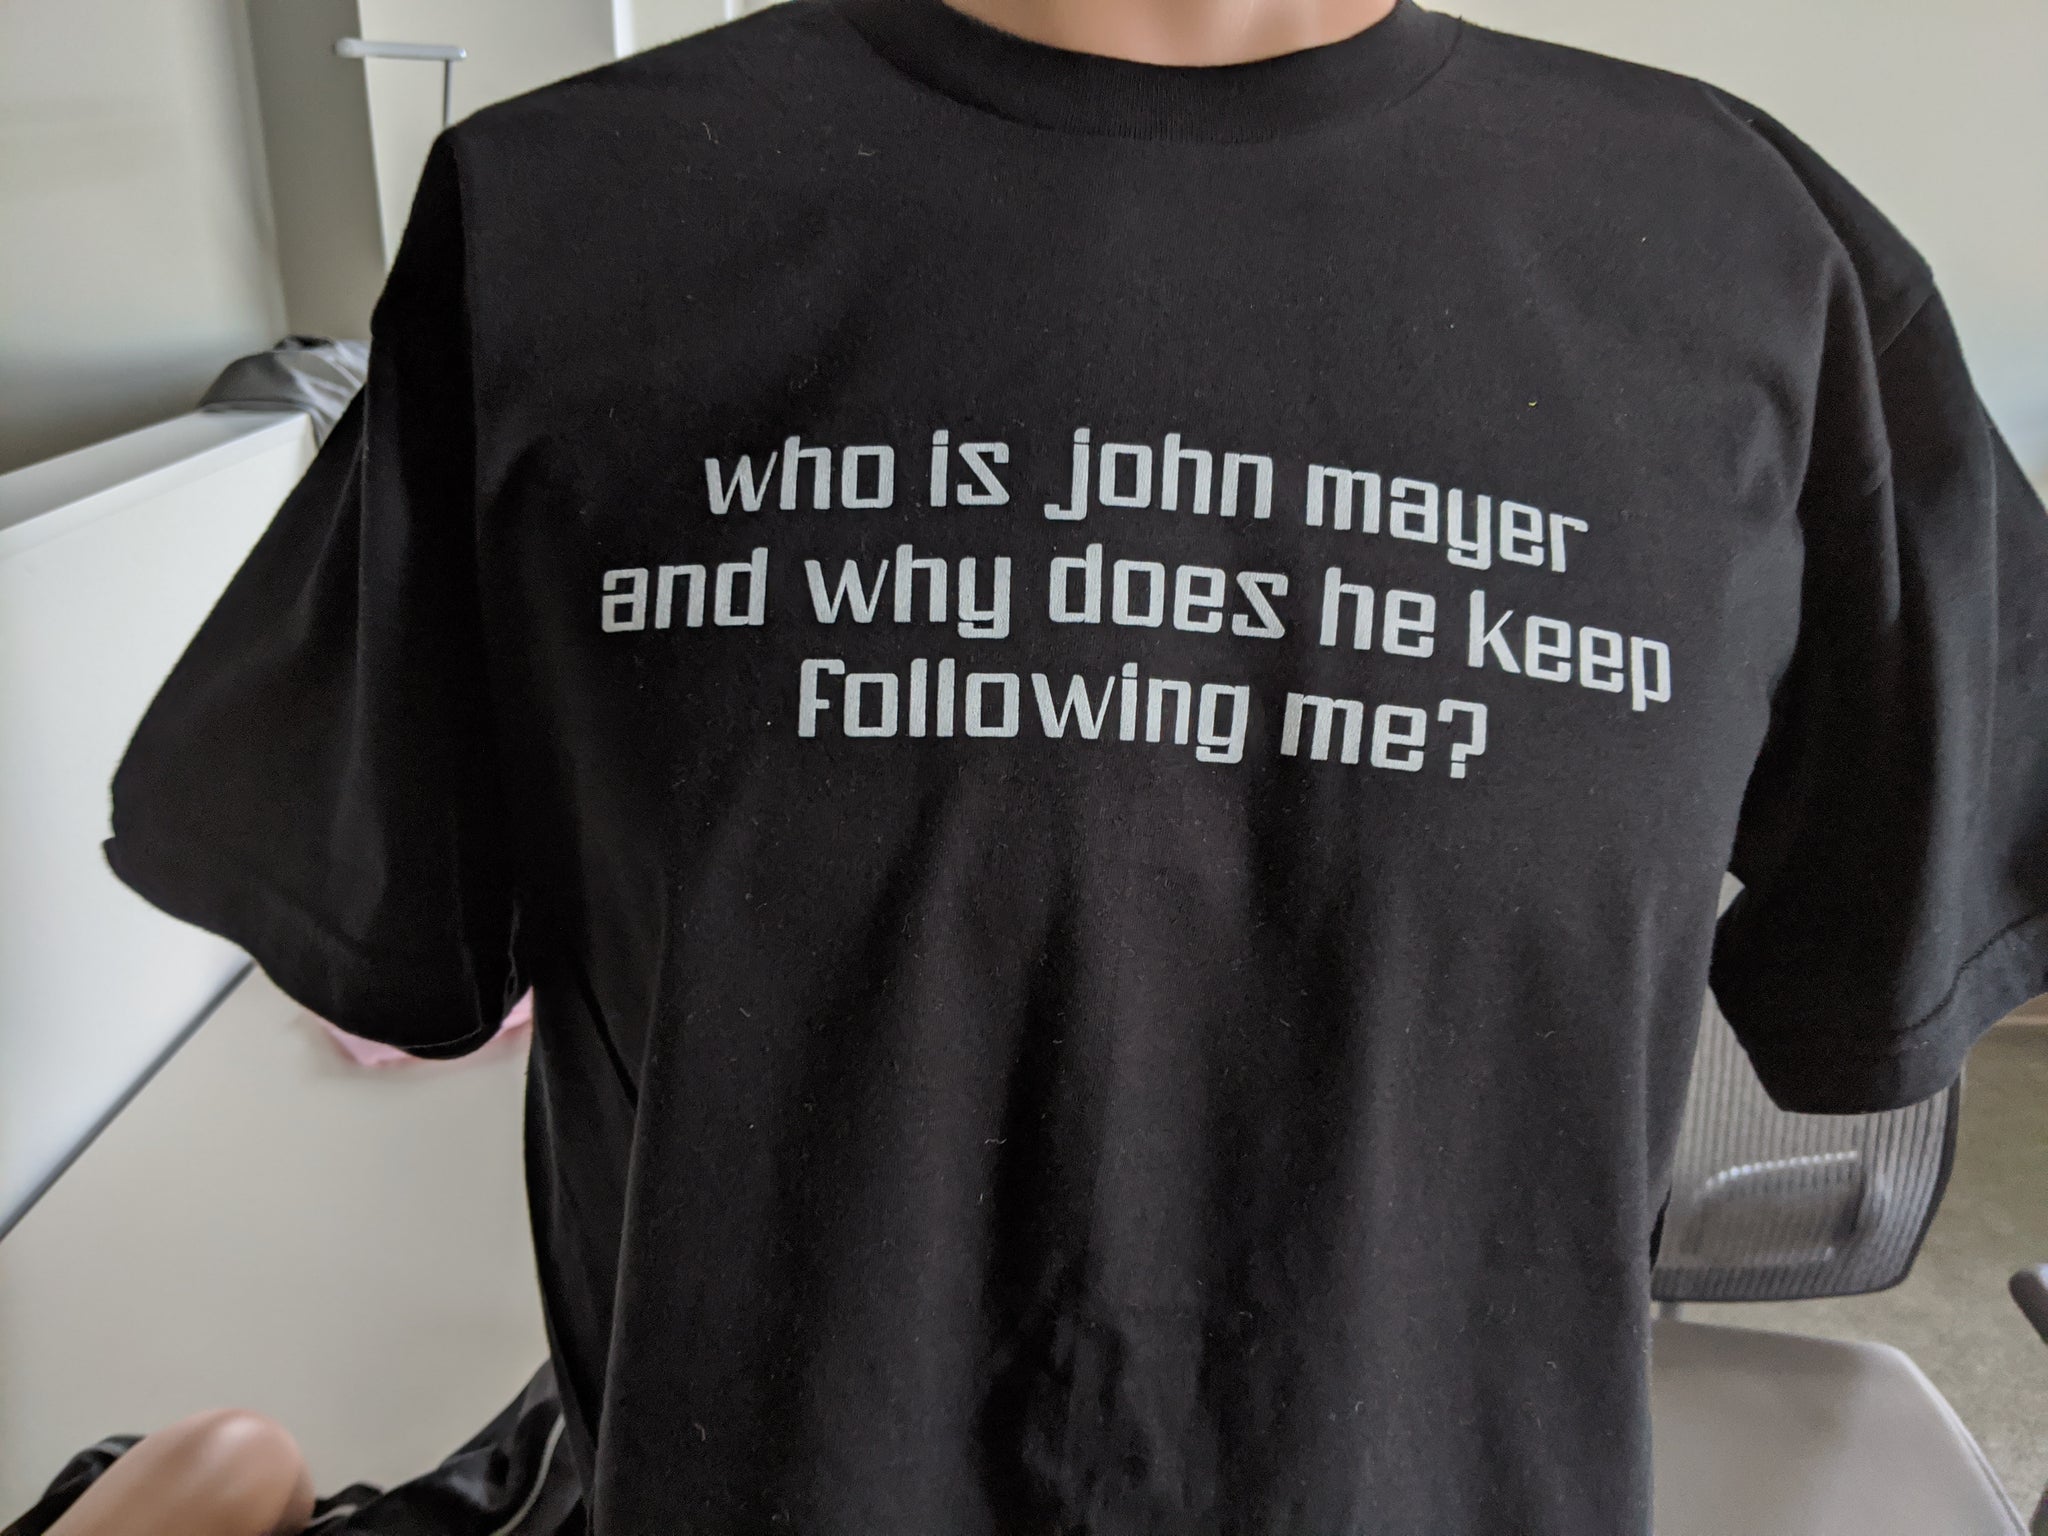 JOHN MAYER / DEAD & CO inspired black tee shirt - grateful dead